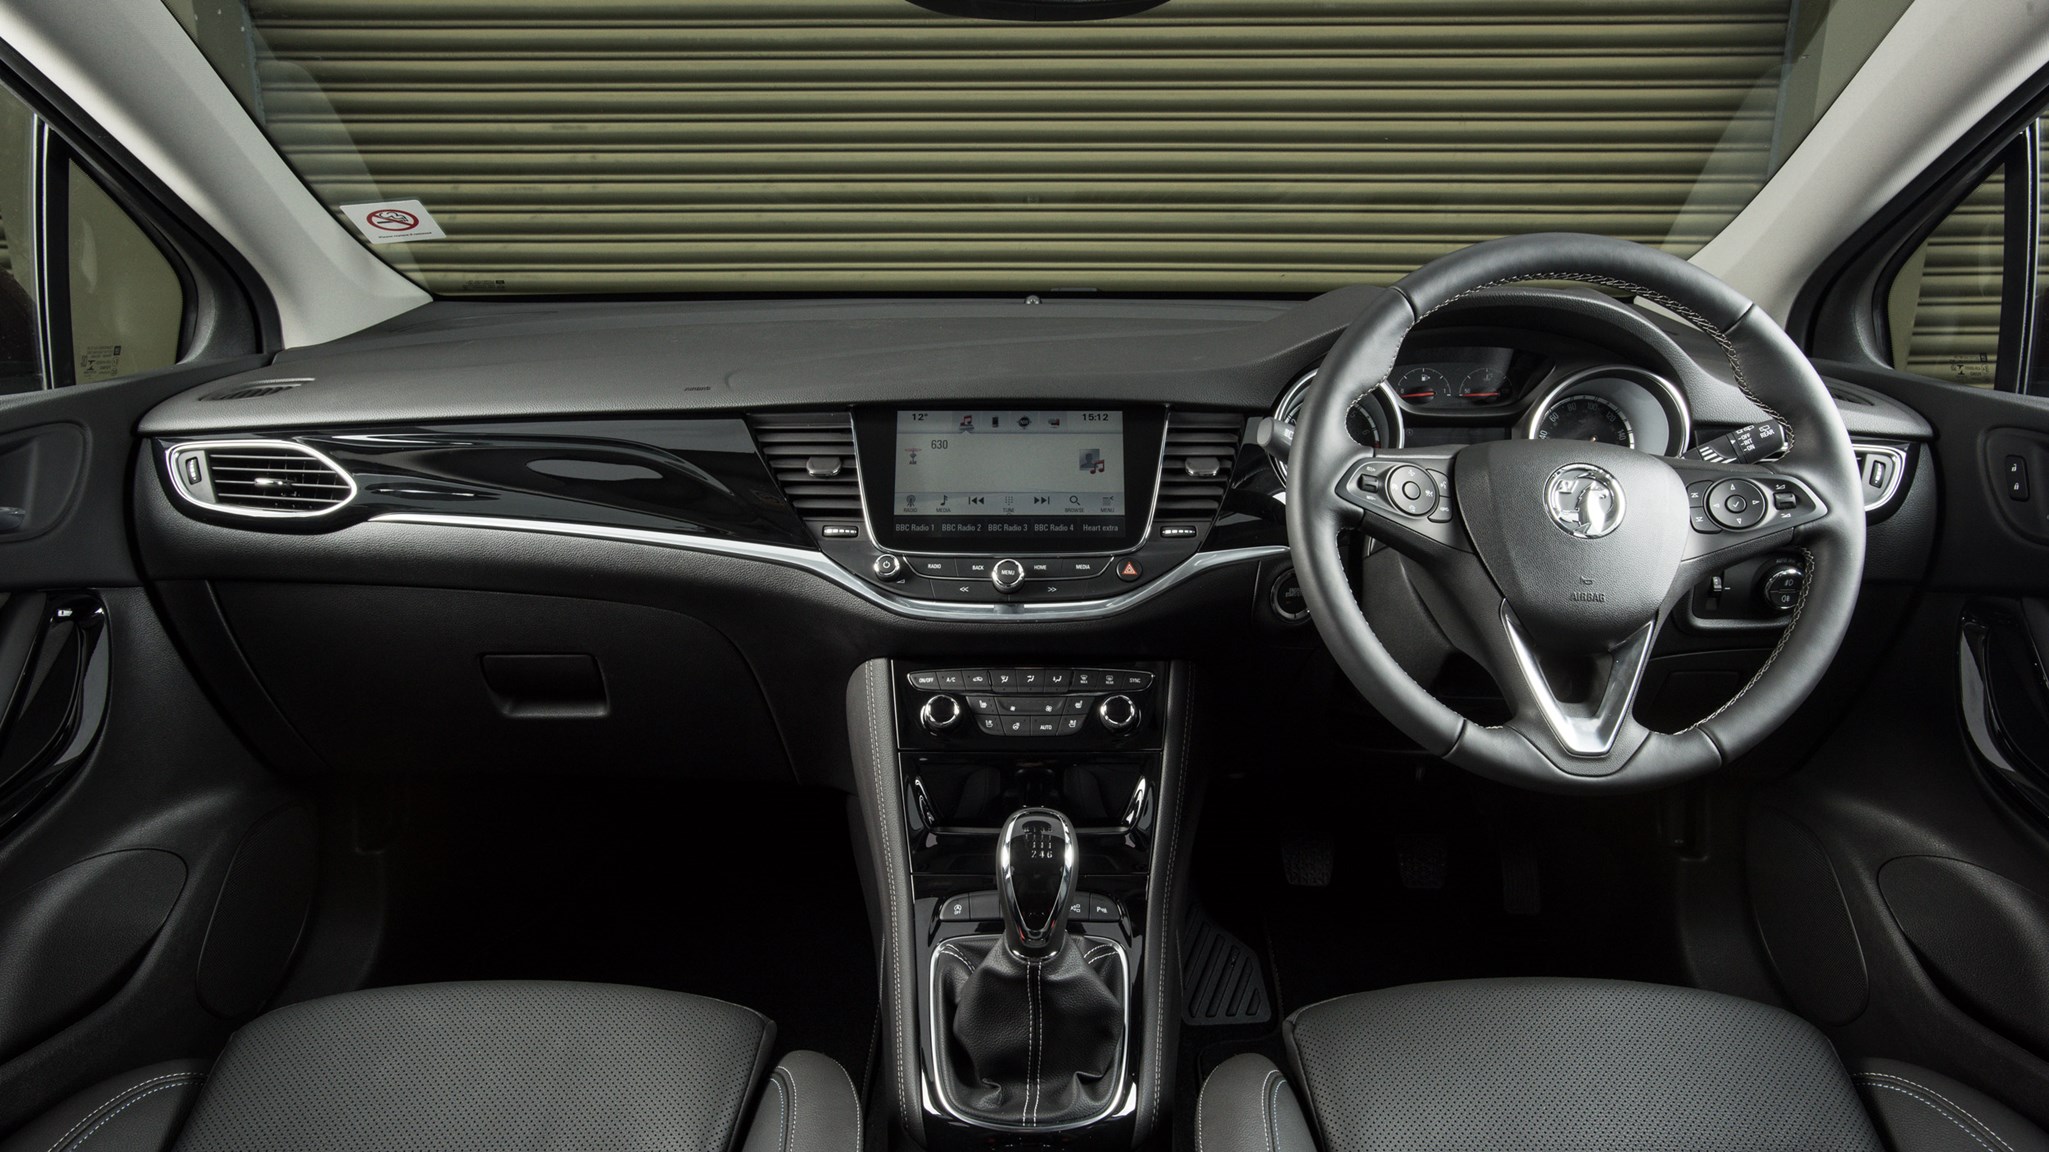 Vauxhall Grandland X interior review